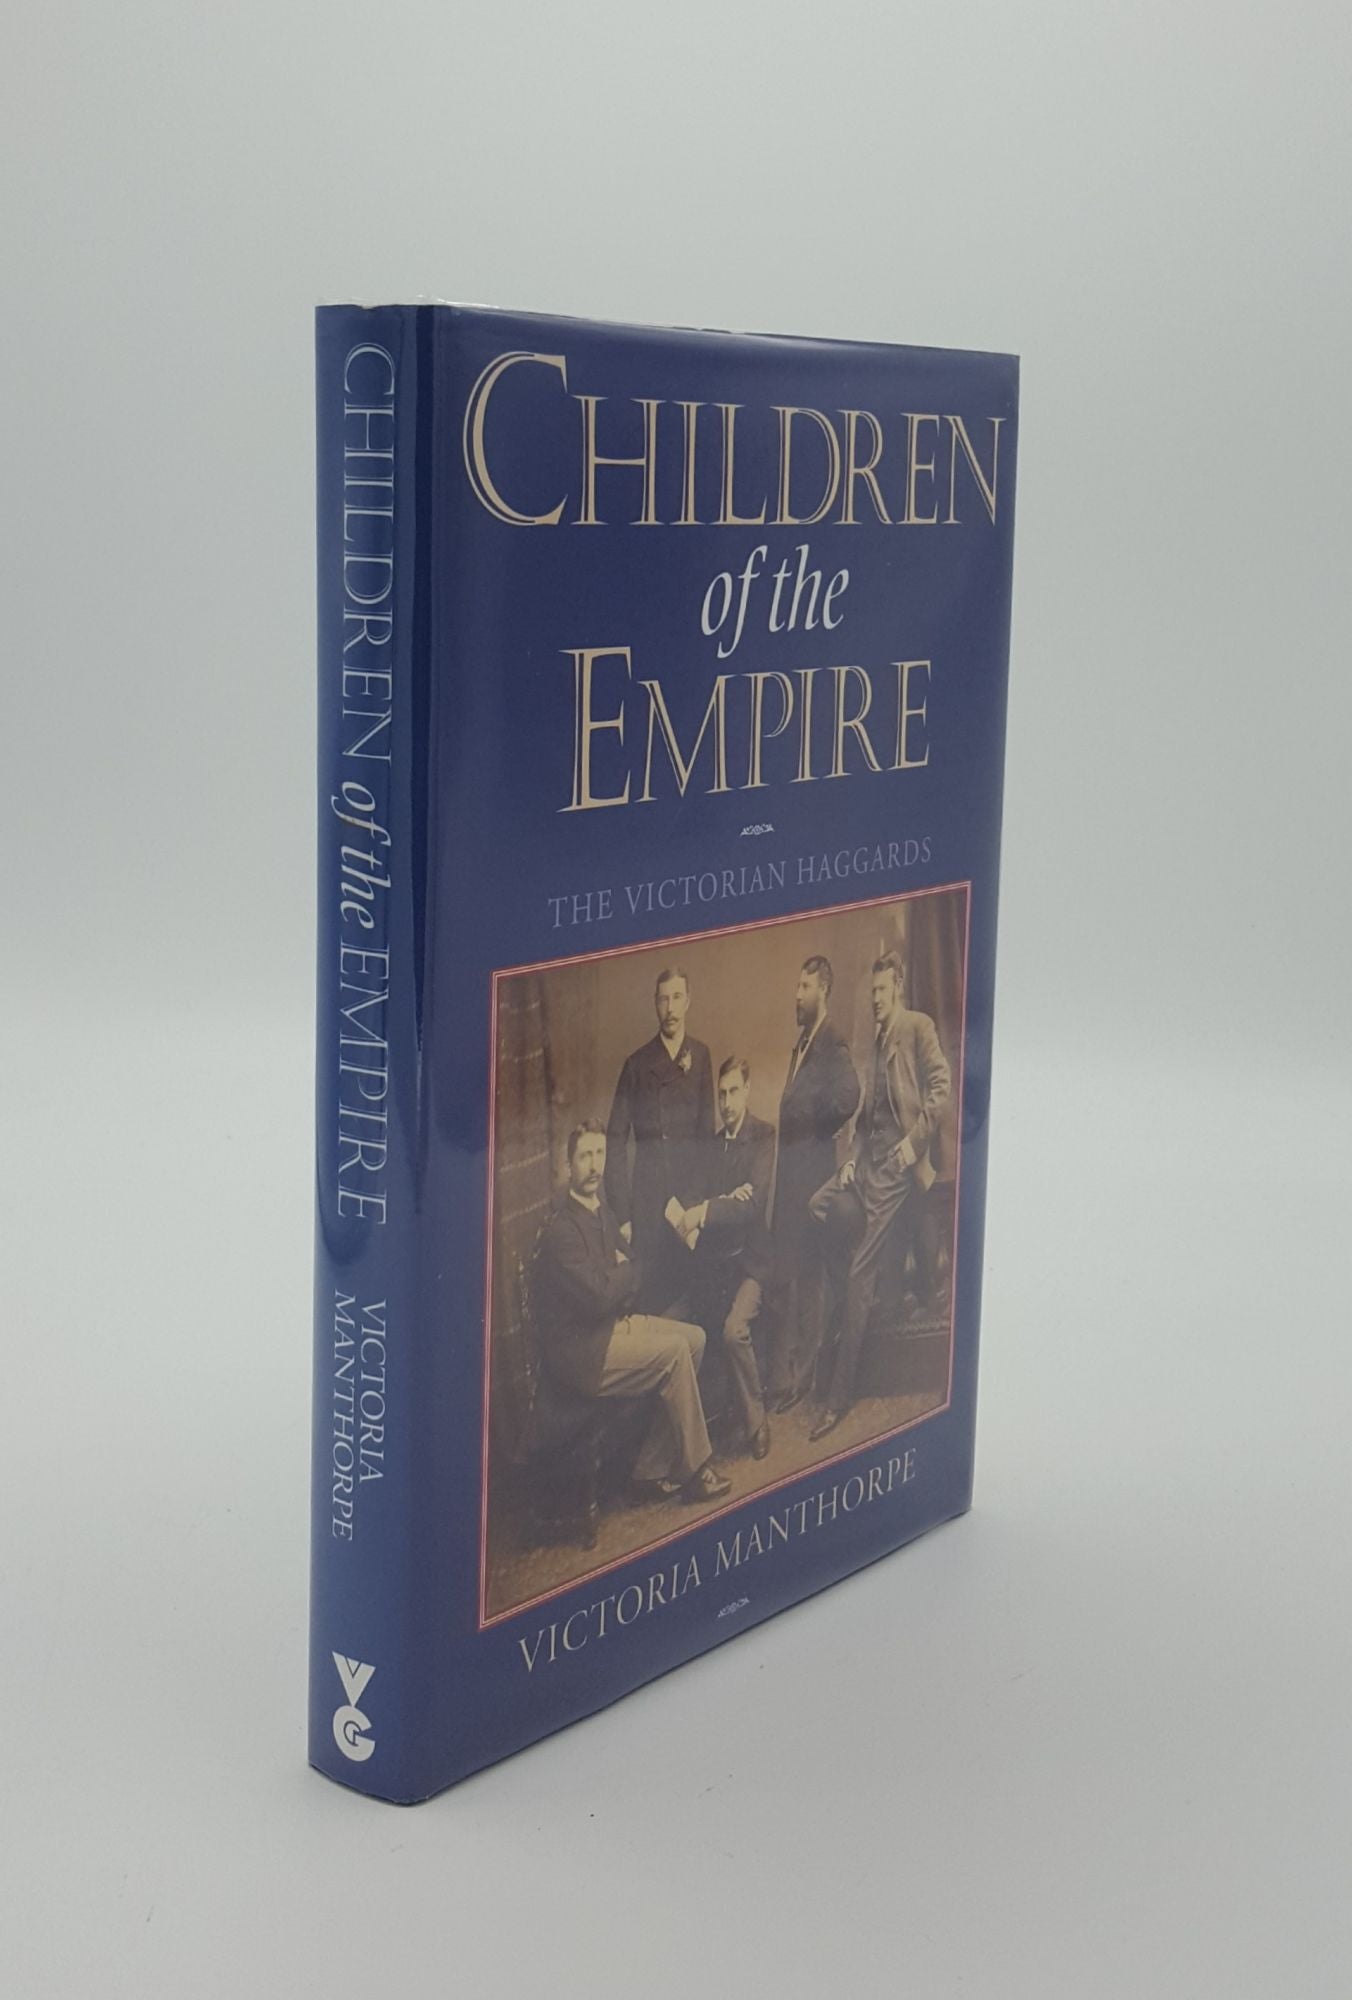 MANTHORPE Victoria - Children of Empire the Victorian Haggards